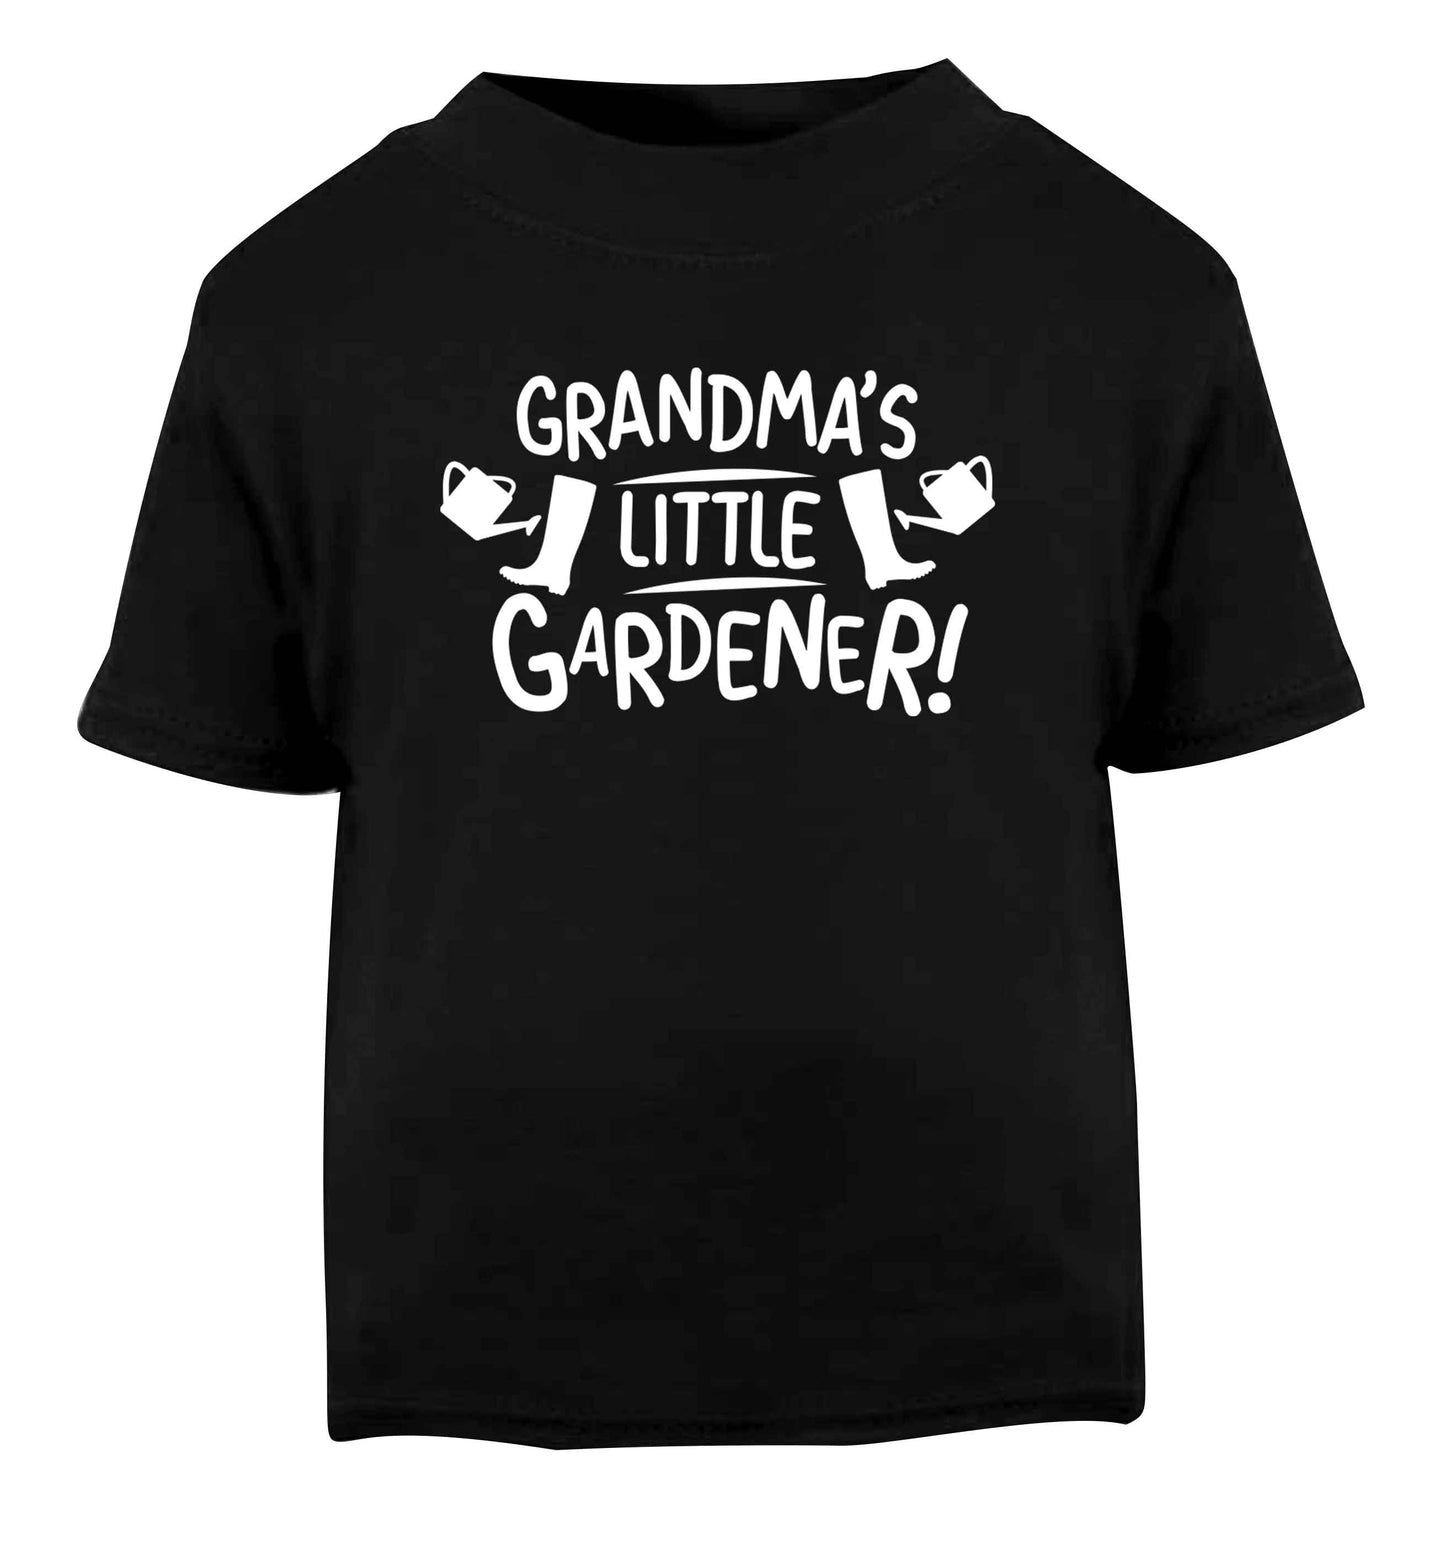 Grandma's little gardener Black Baby Toddler Tshirt 2 years